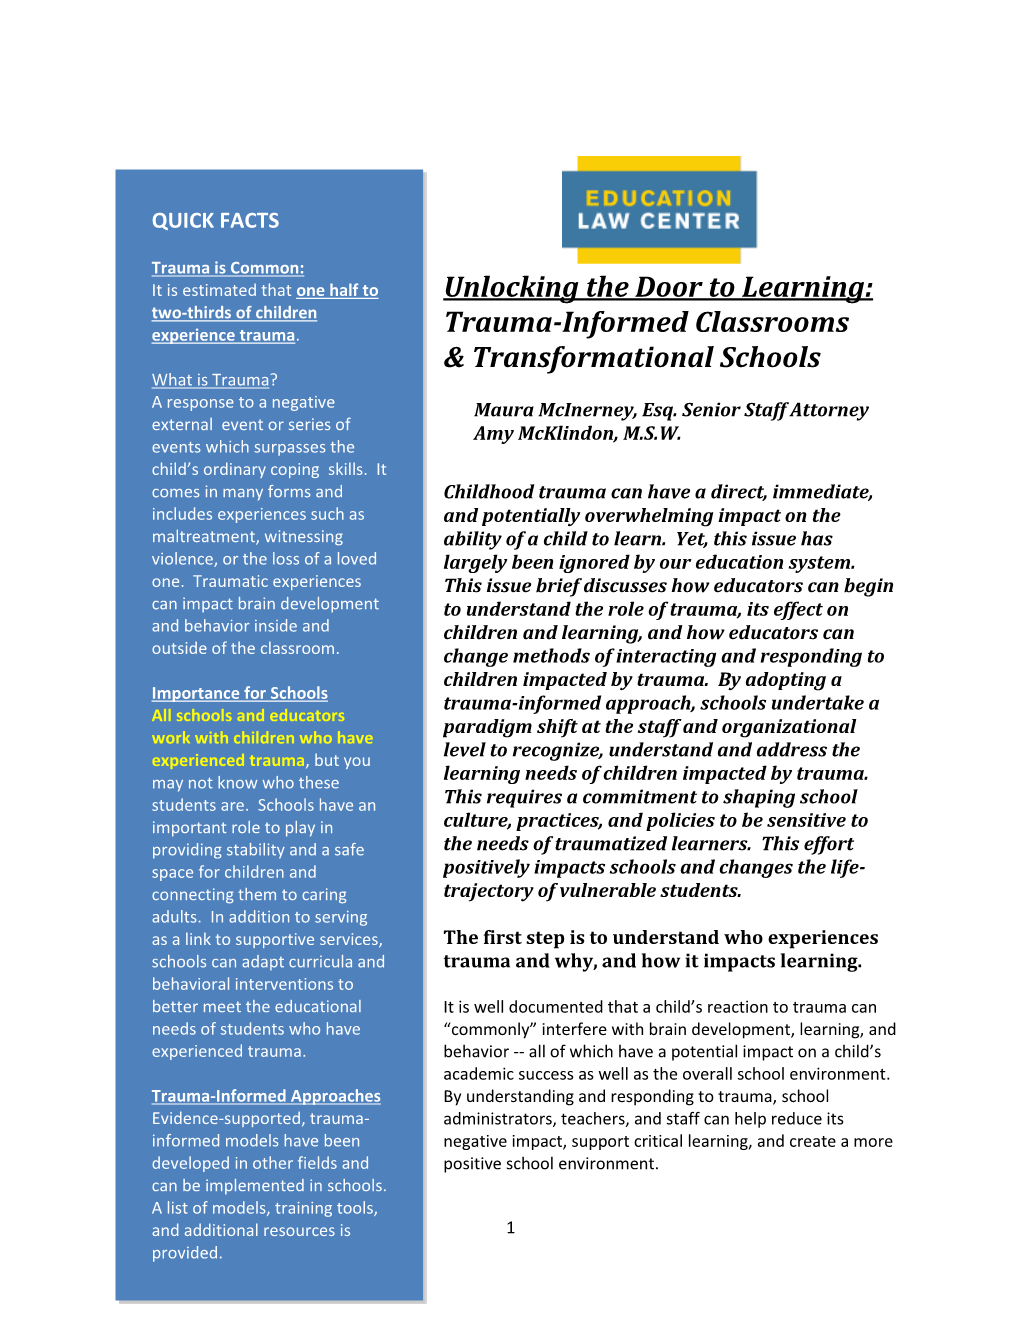 Trauma-Informed Classrooms & Transformational Schools